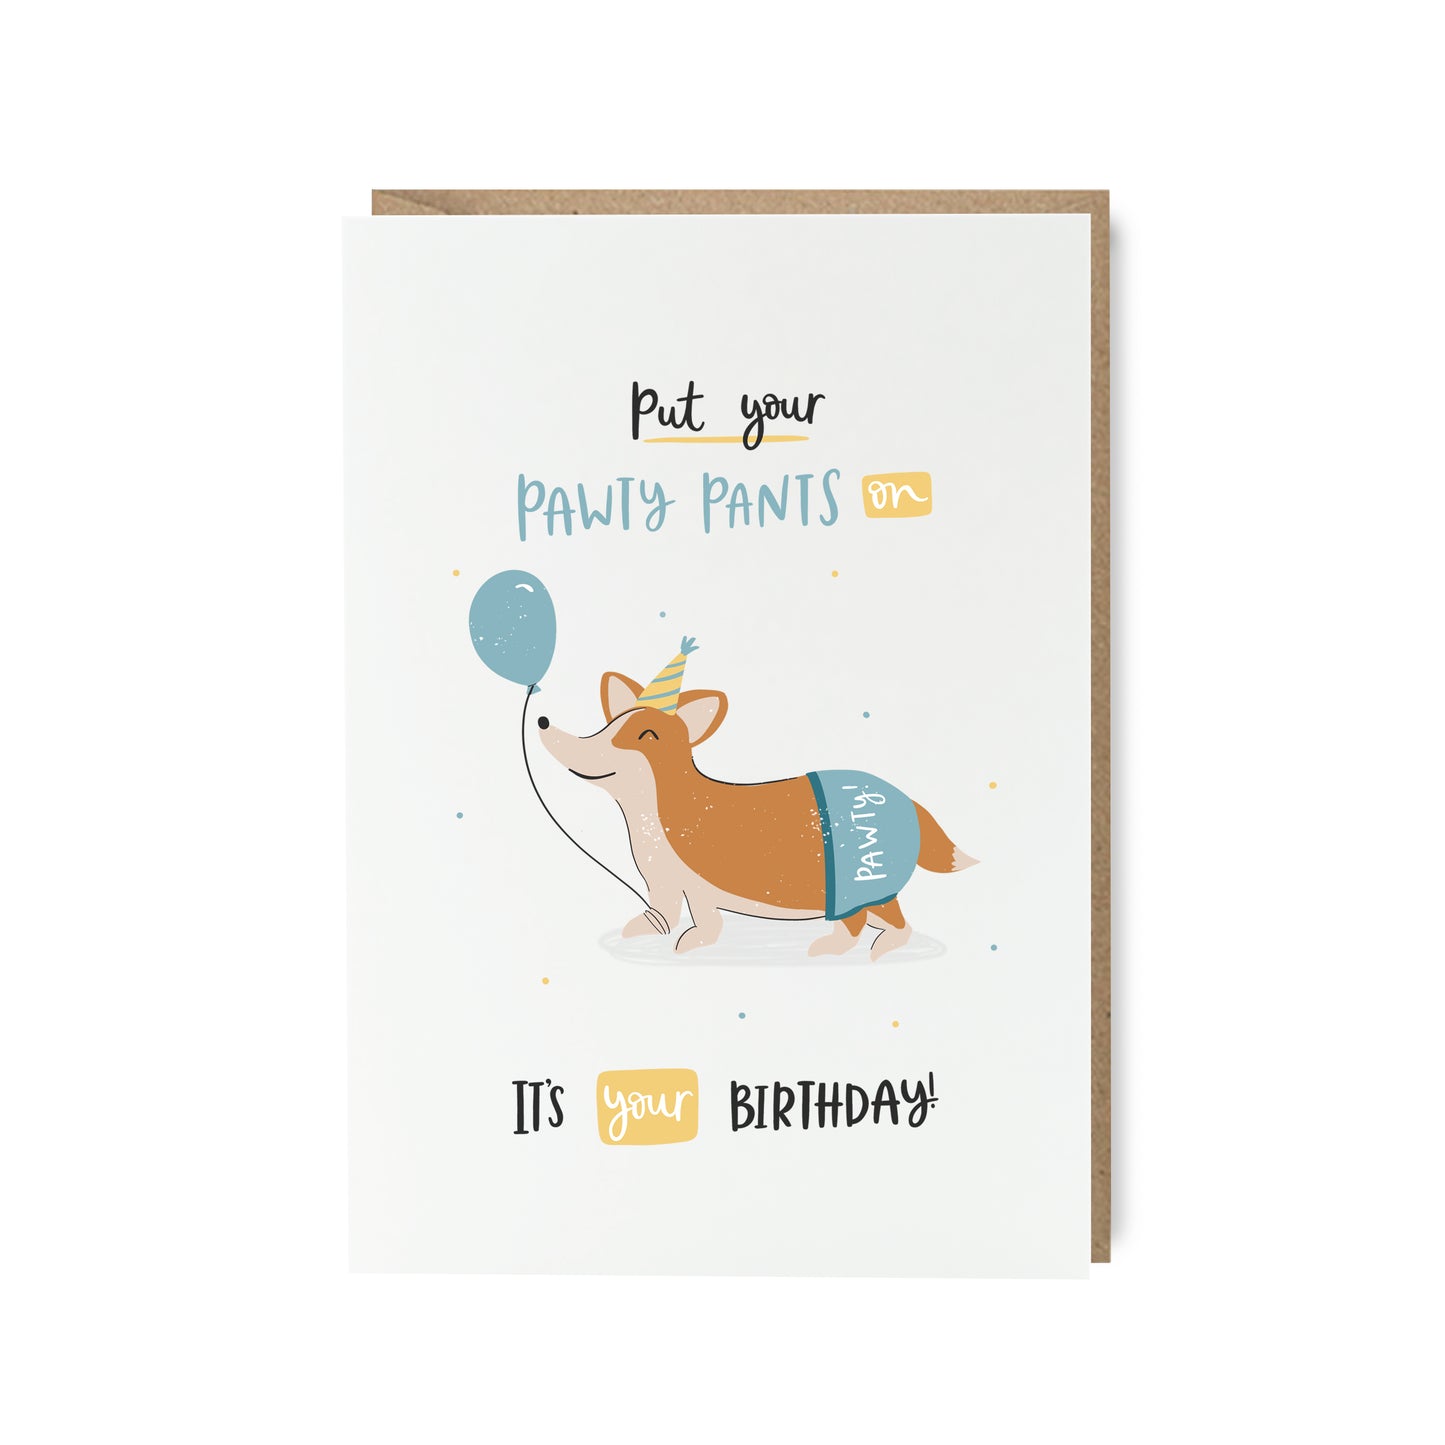 Pawty pants funny dog birthday card by abbie imagine